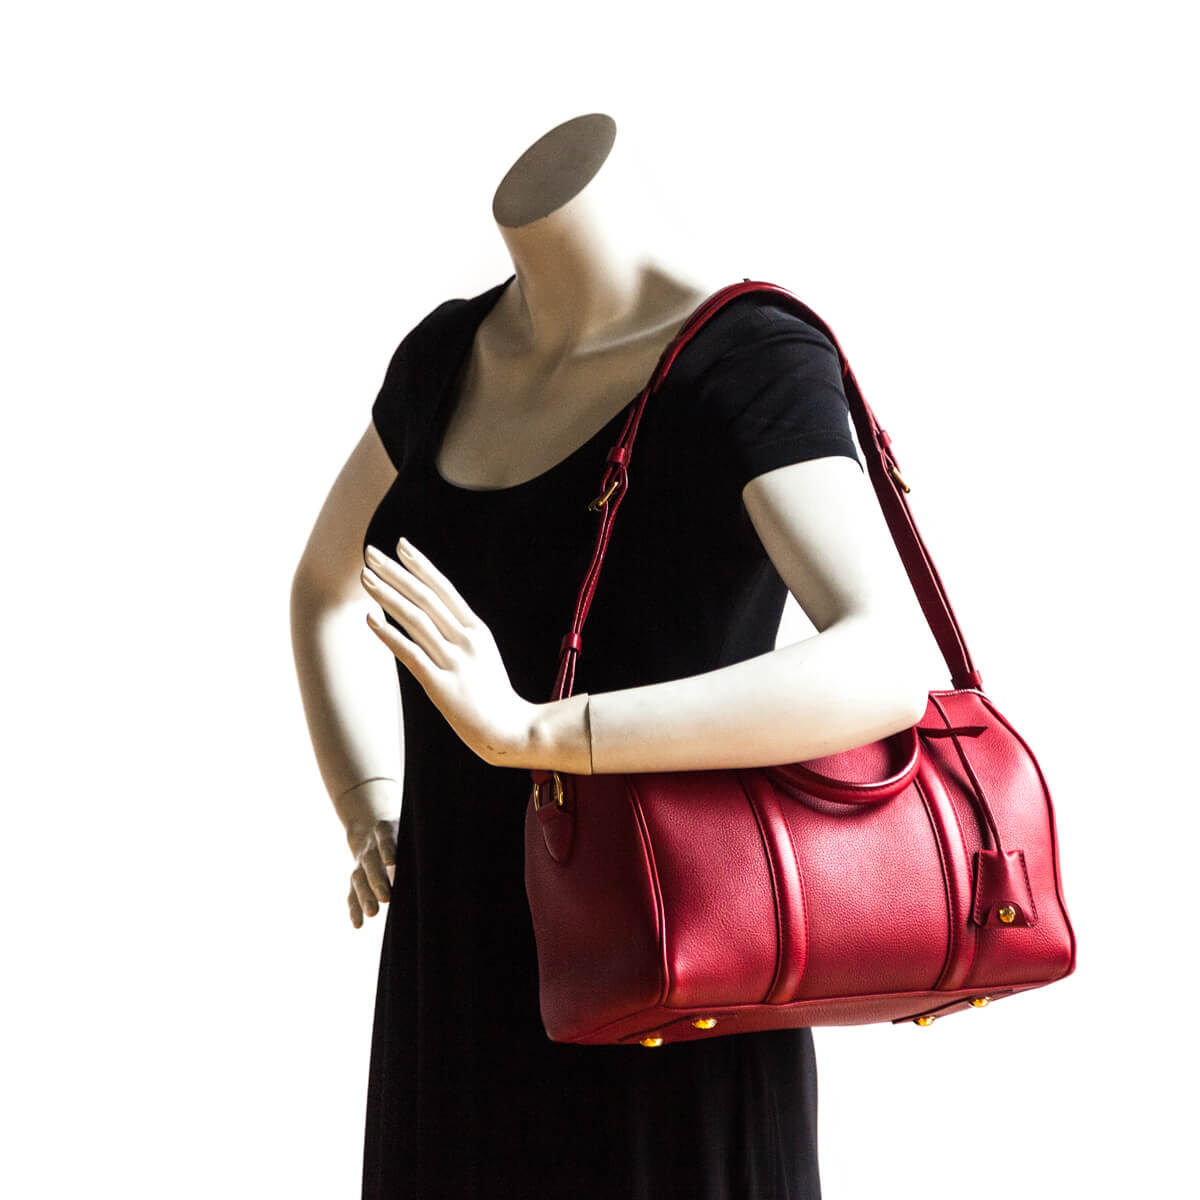 Louis Vuitton Red Leather Sofia Coppola PM Bag